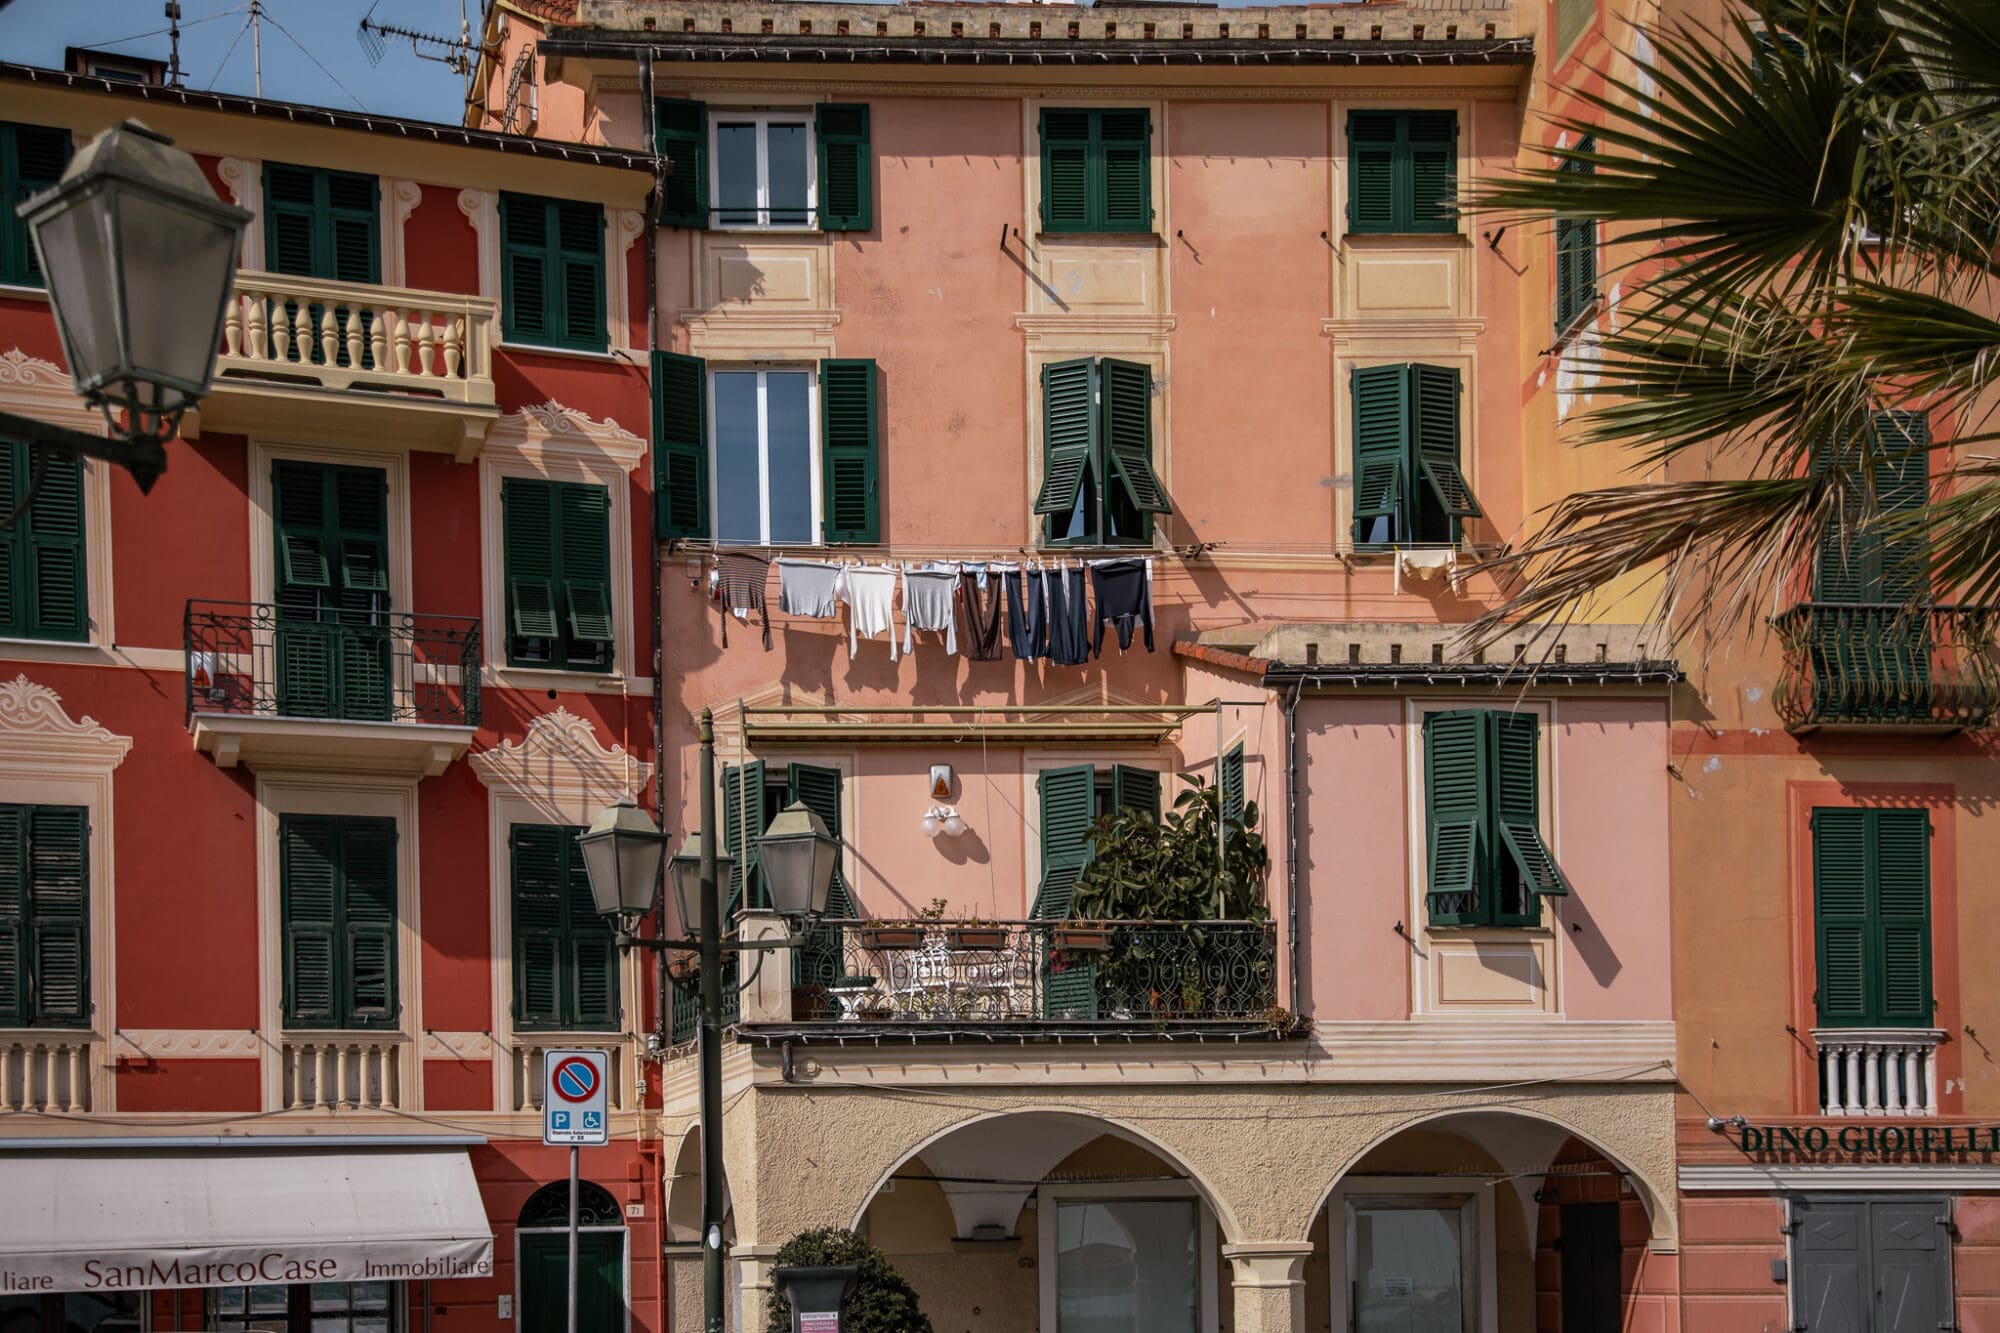 Colourful Houses in Santa Margherita Ligure, Italy